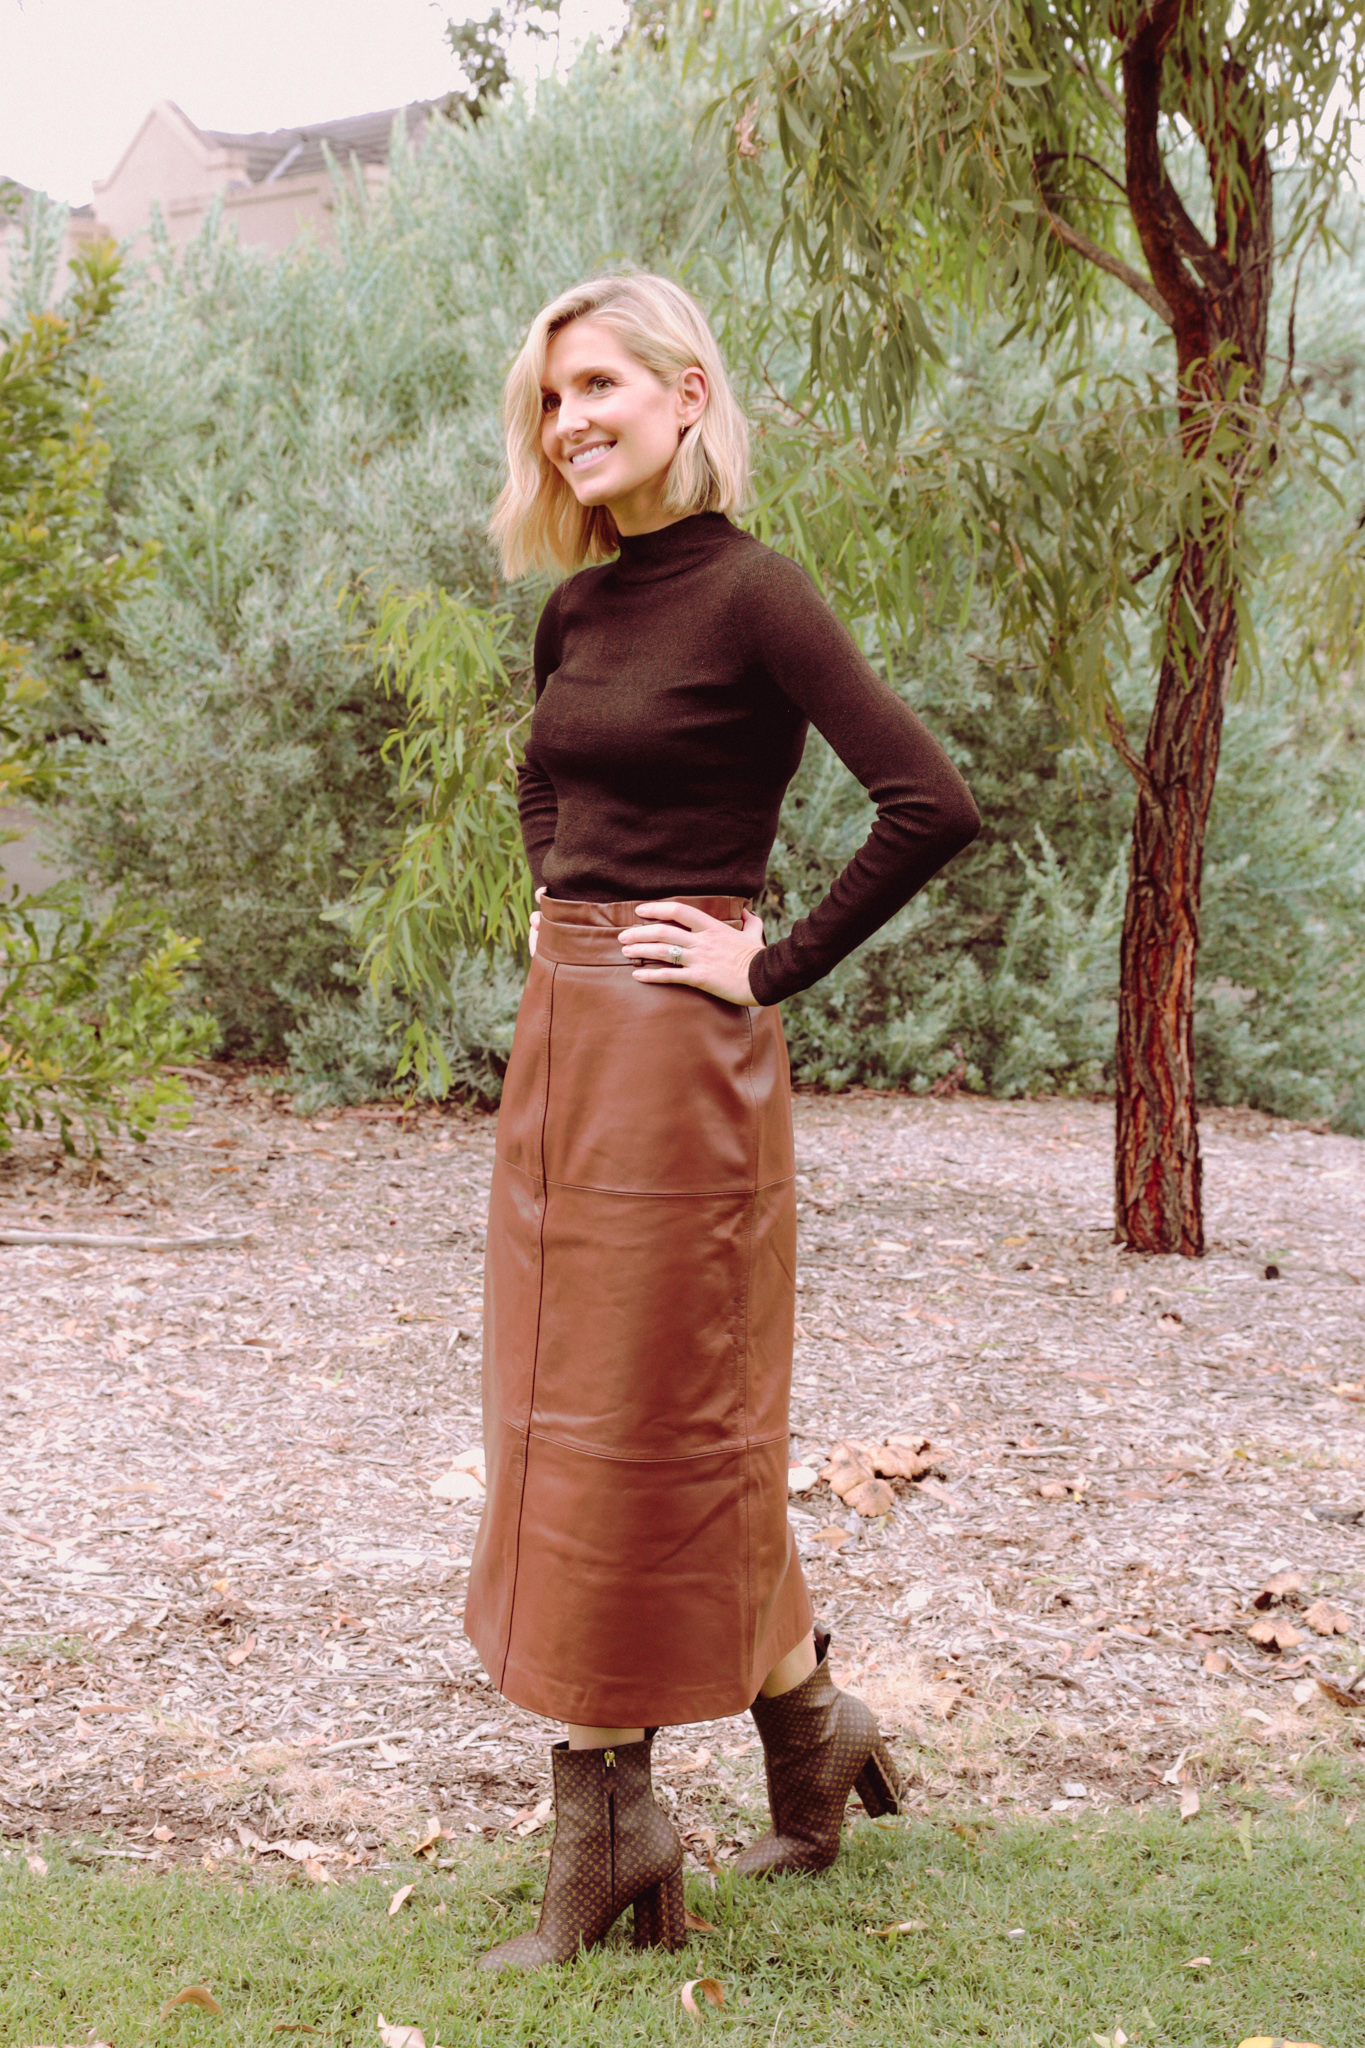 monogram leather skirt